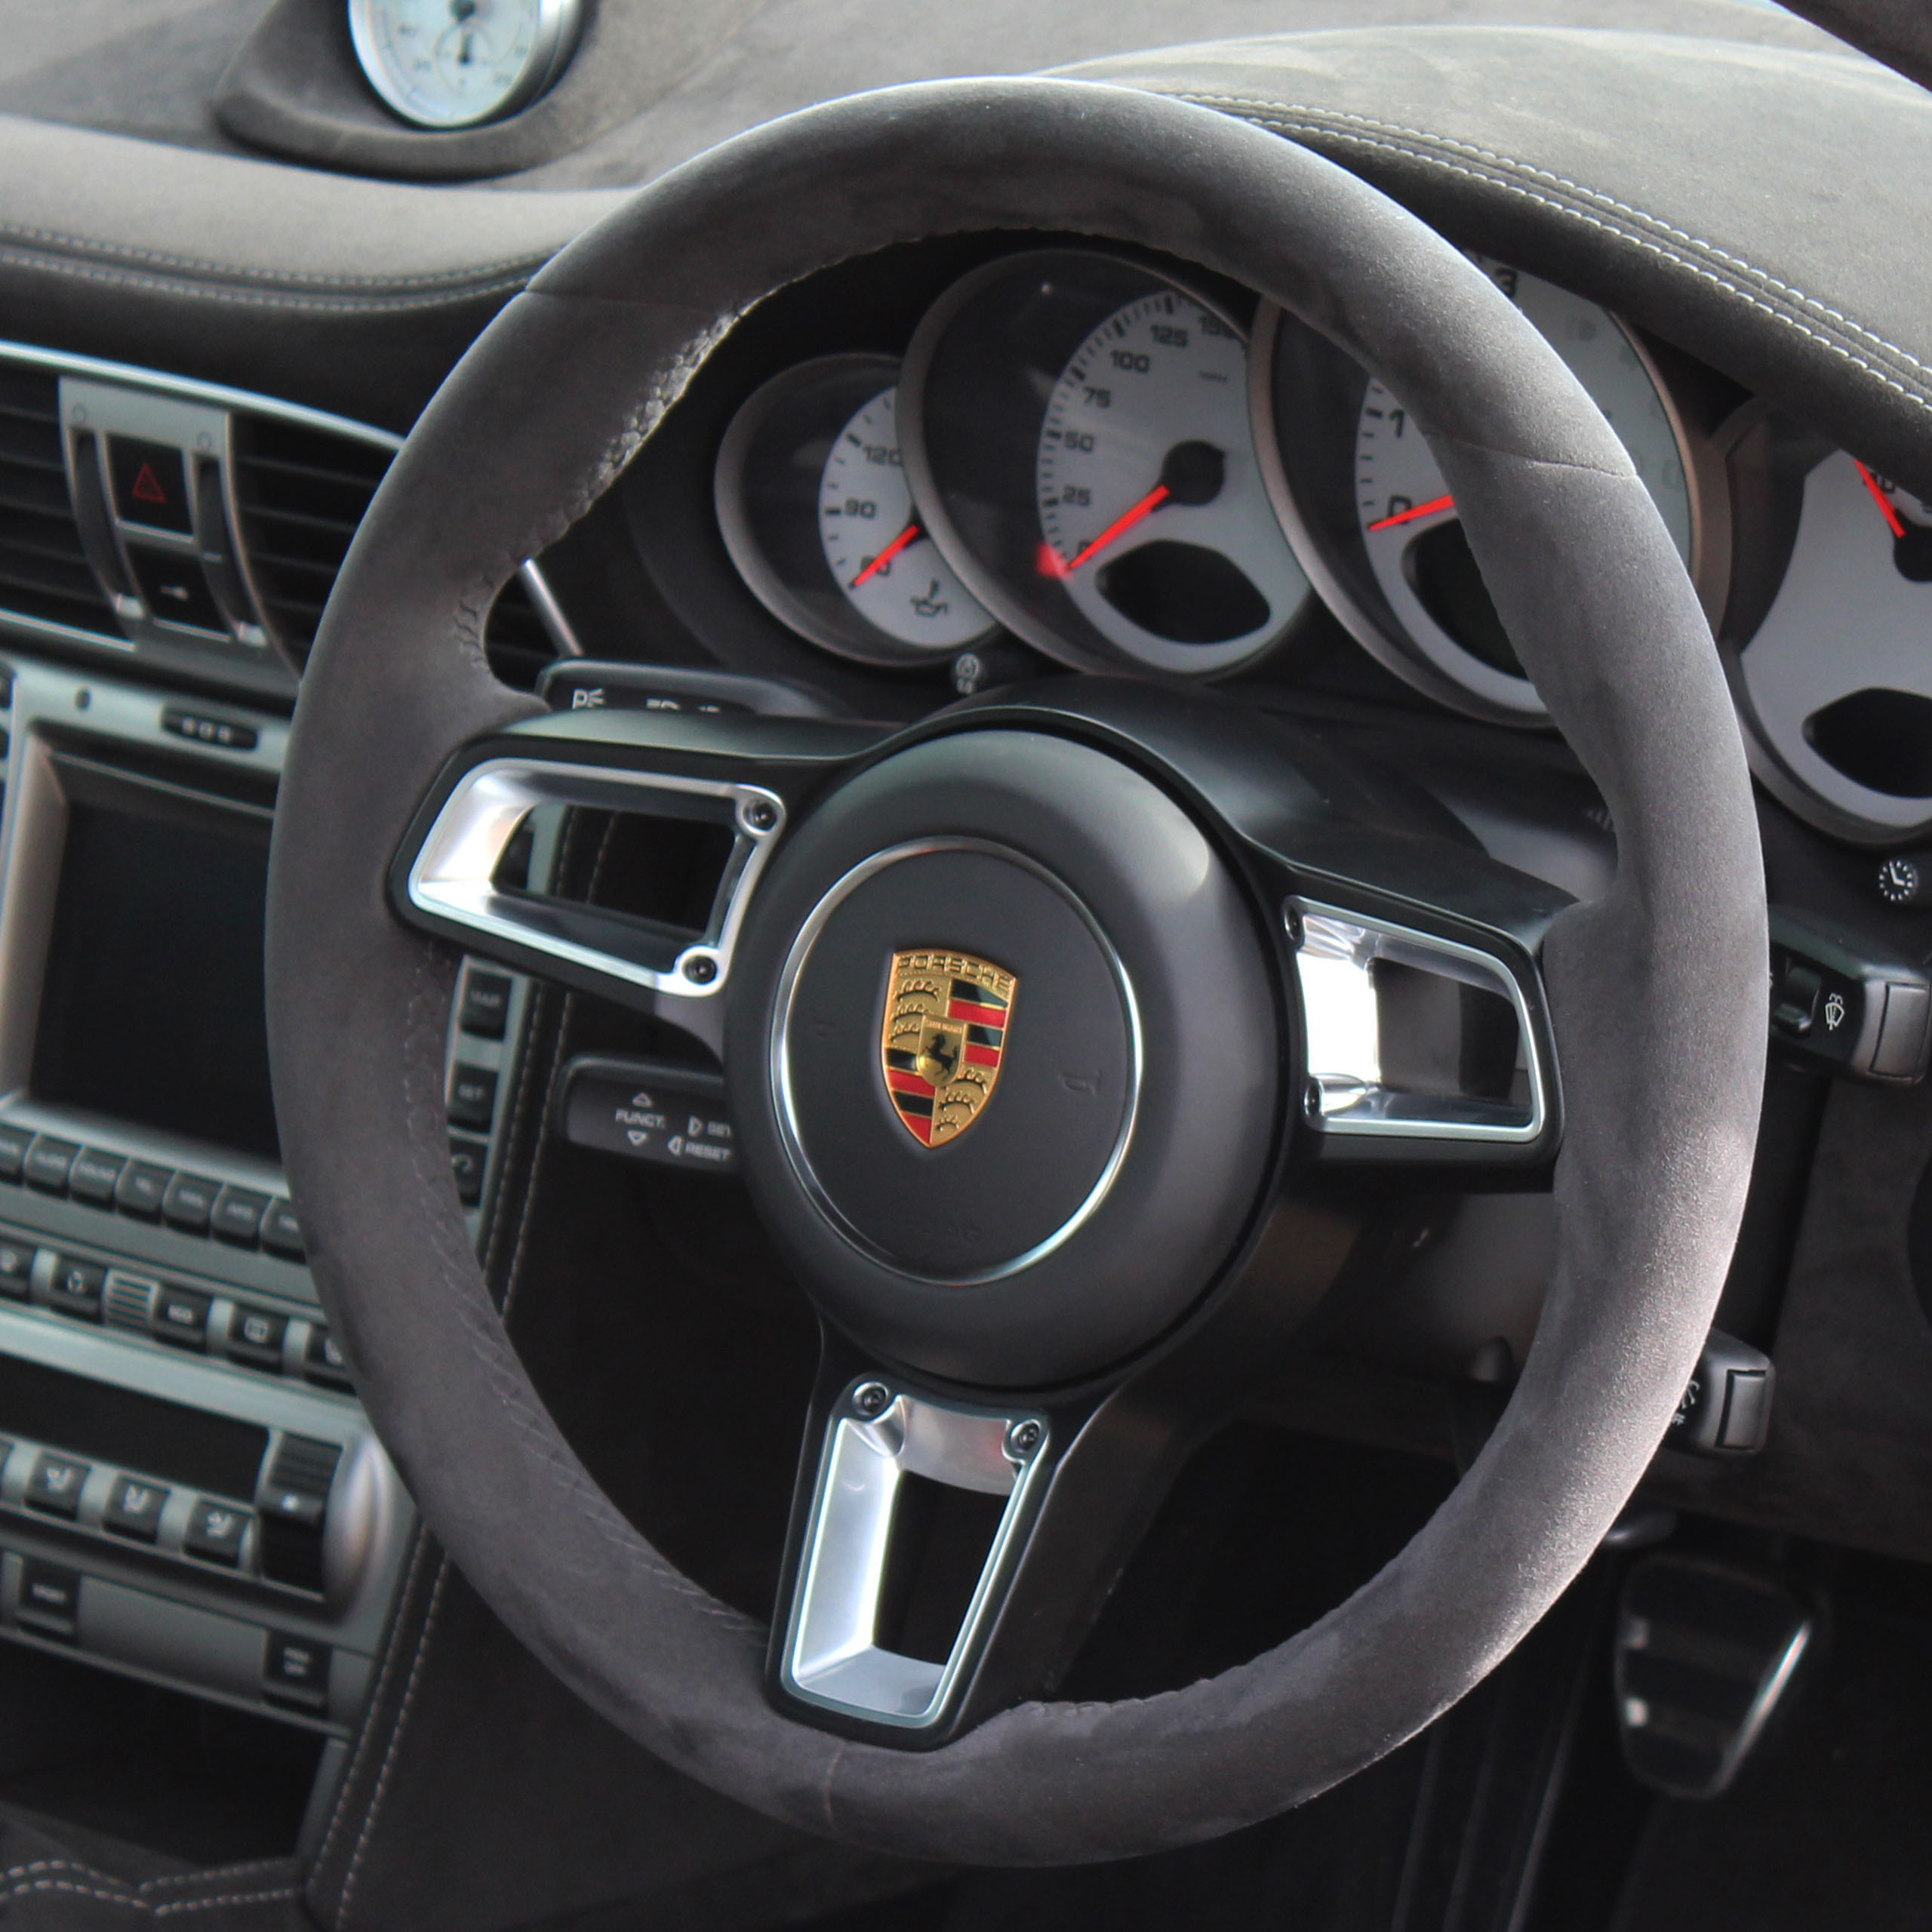 Porsche 911 997 steering wheel upgrade to 991 charcoal grey Alcantara by Designls